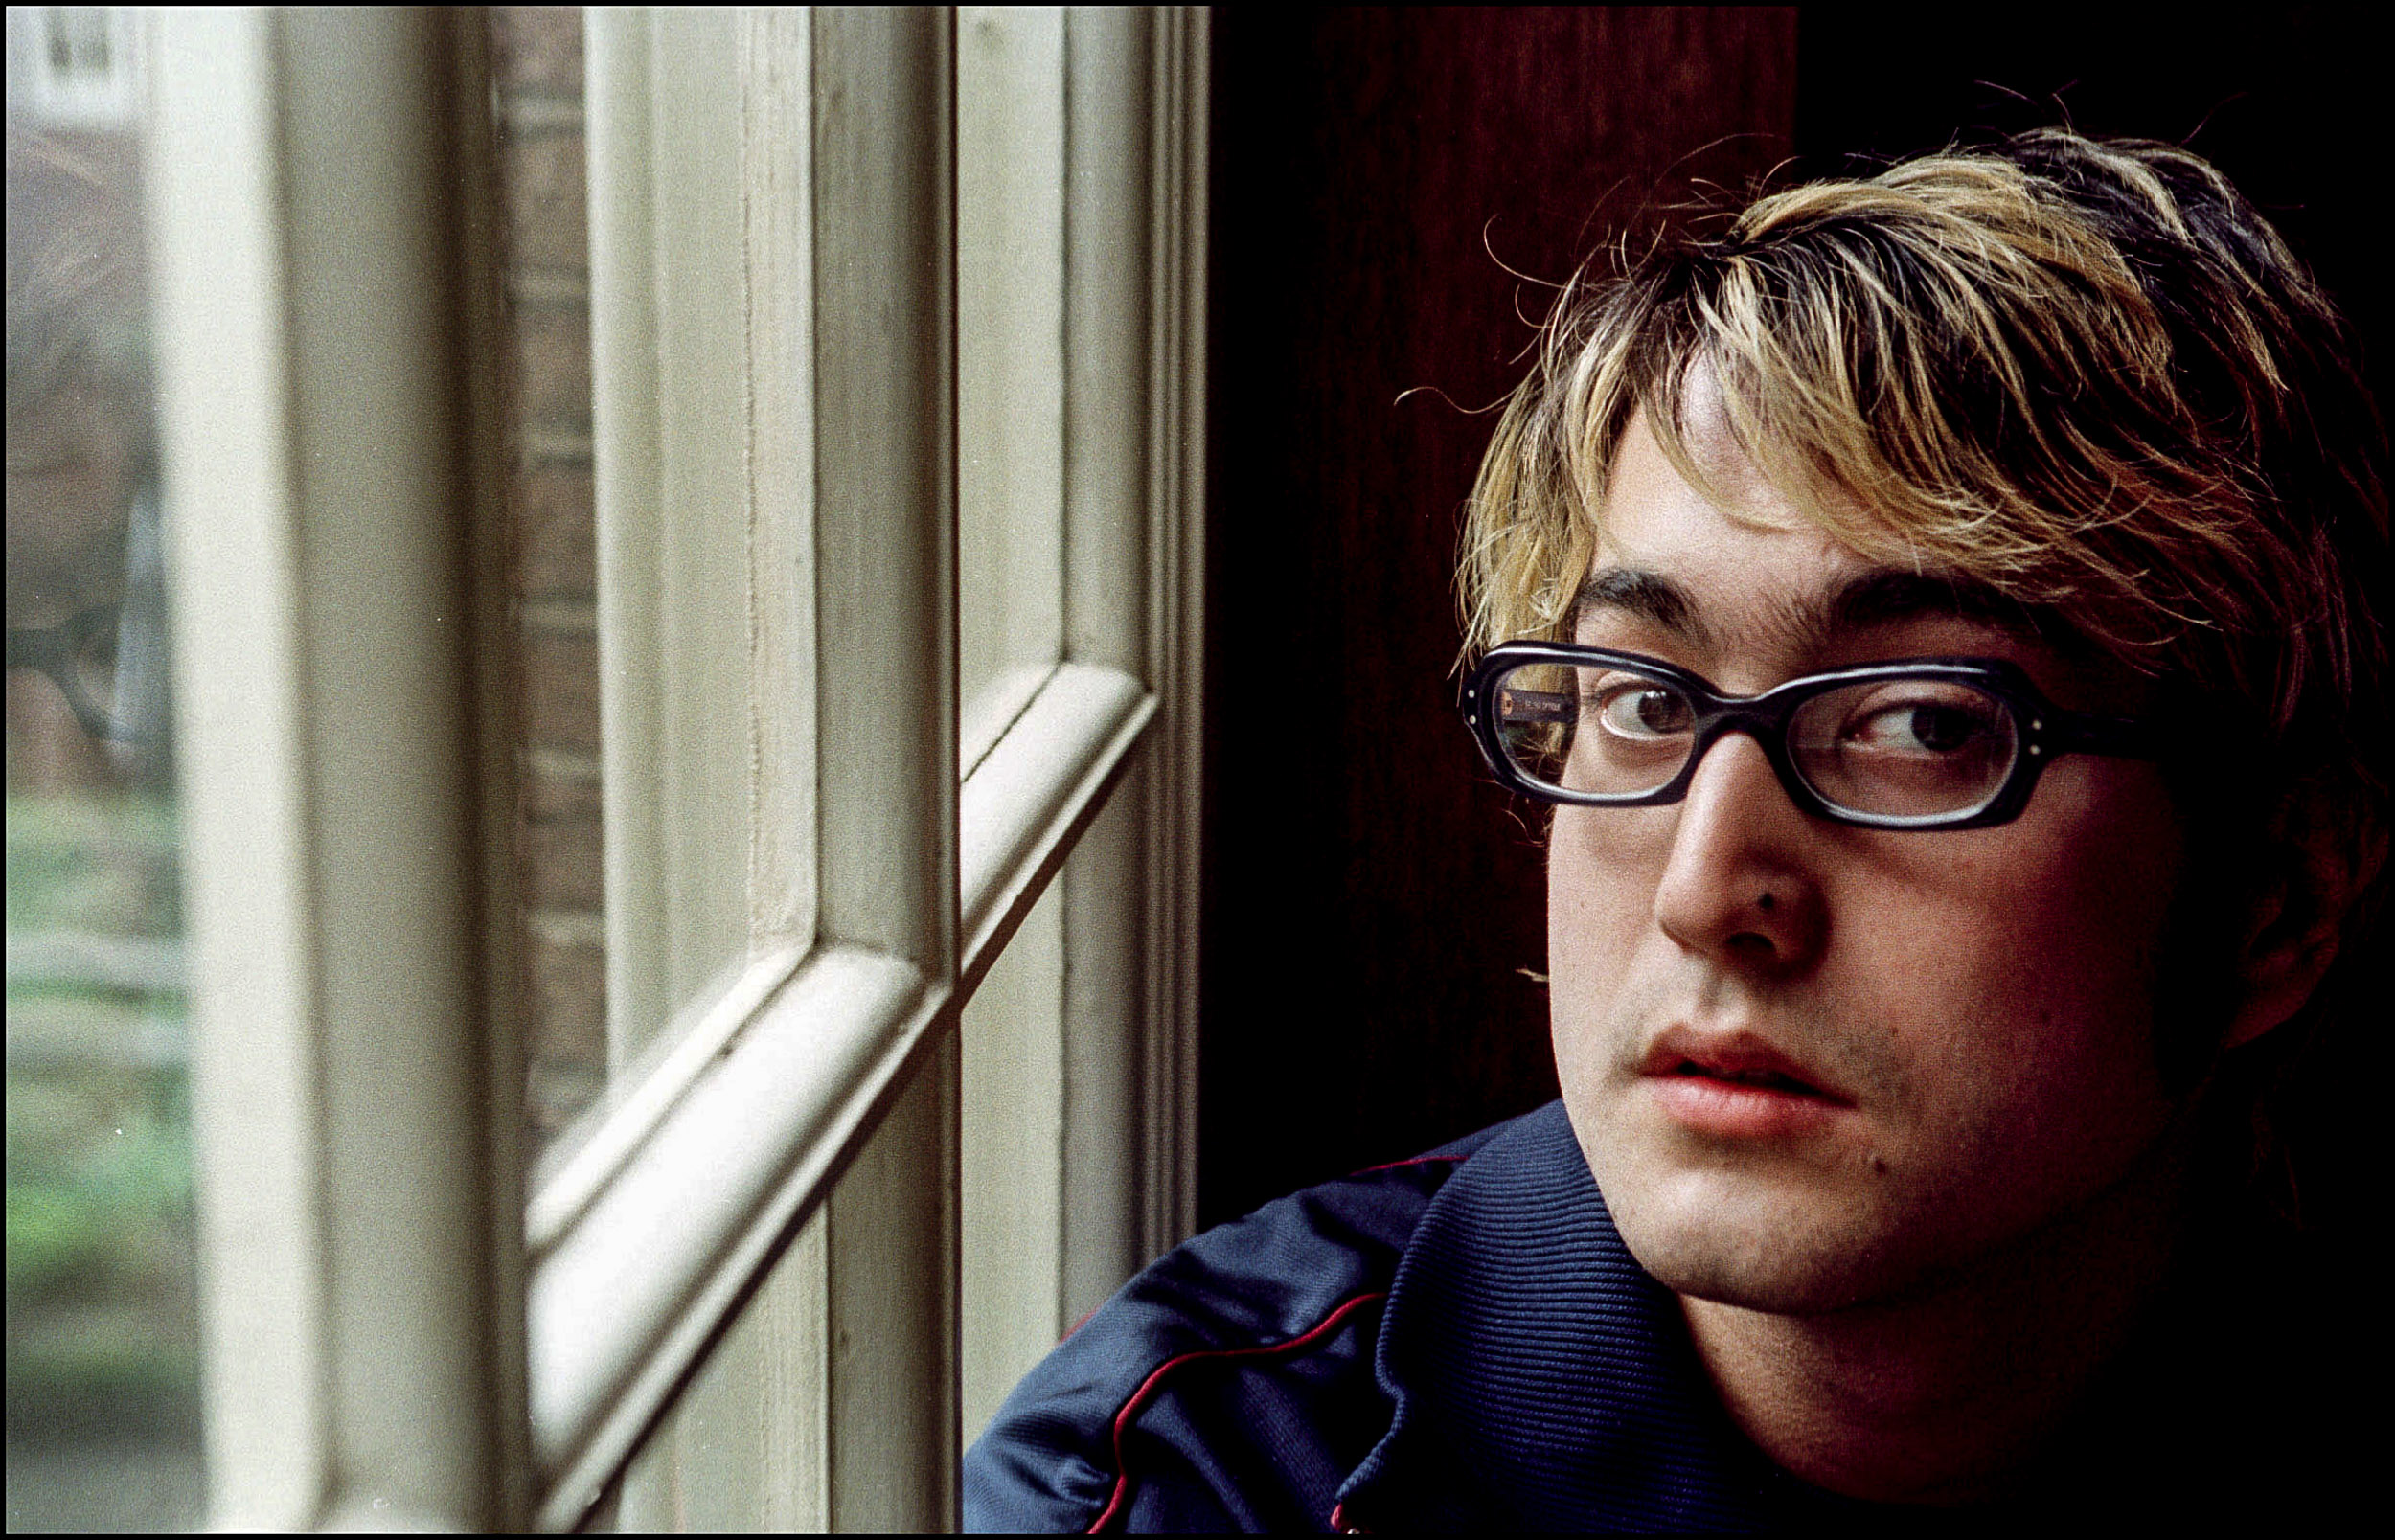 John Lennon's son, Sean Lennon, near a window